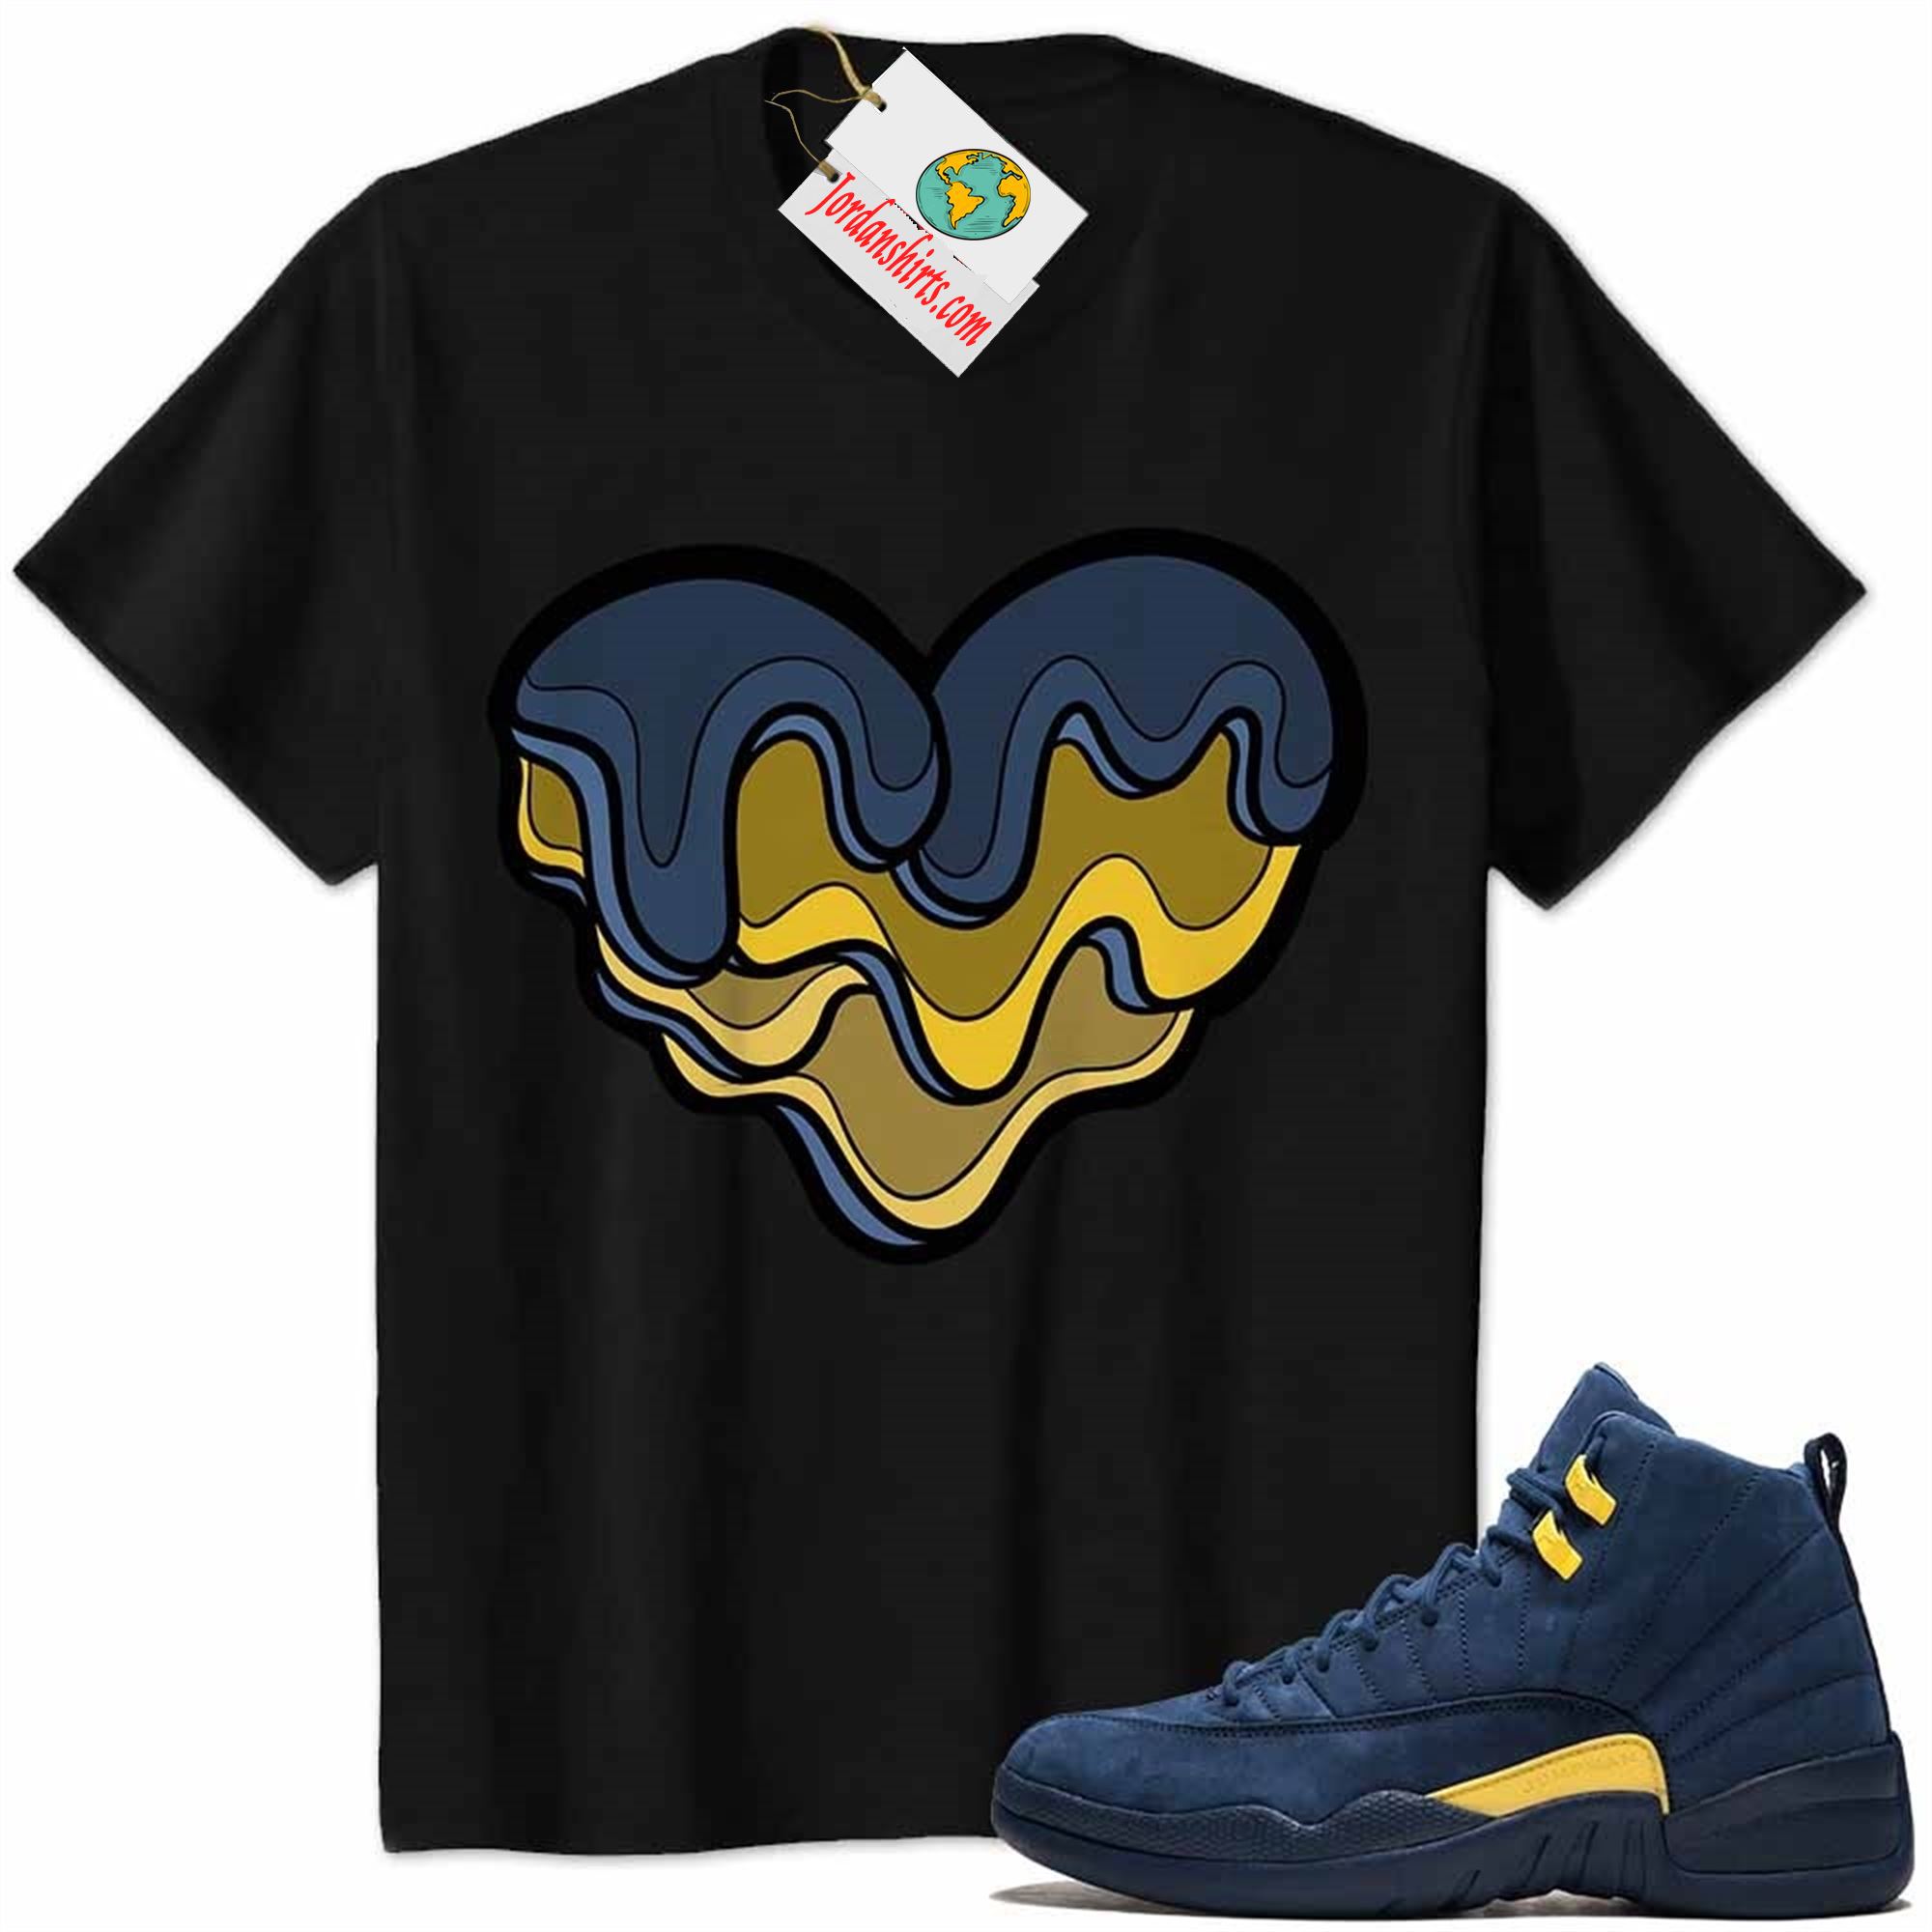 Jordan 12 Shirt, Melt Dripping Heart Black Air Jordan 12 Michigan 12s Size Up To 5xl